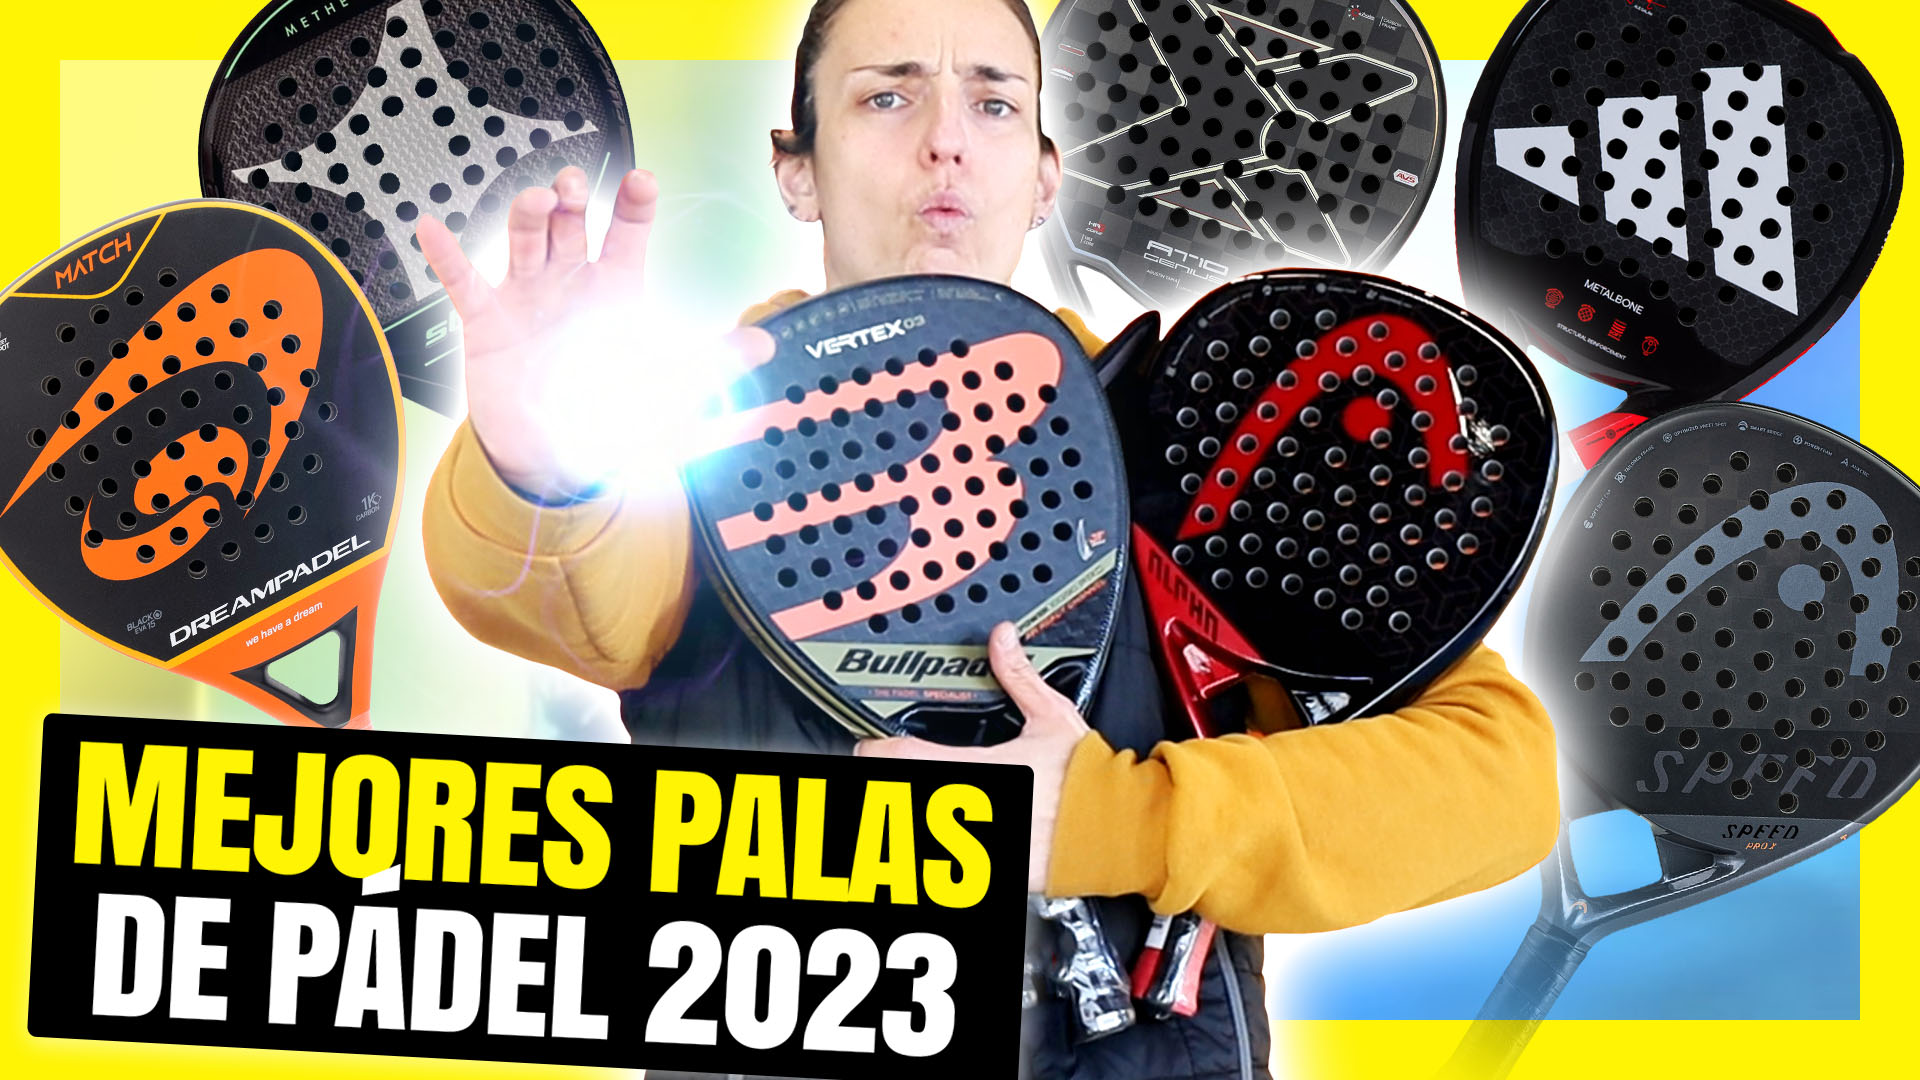 PALAS DE PADEL 2023 - Compra tu pala de pádel en